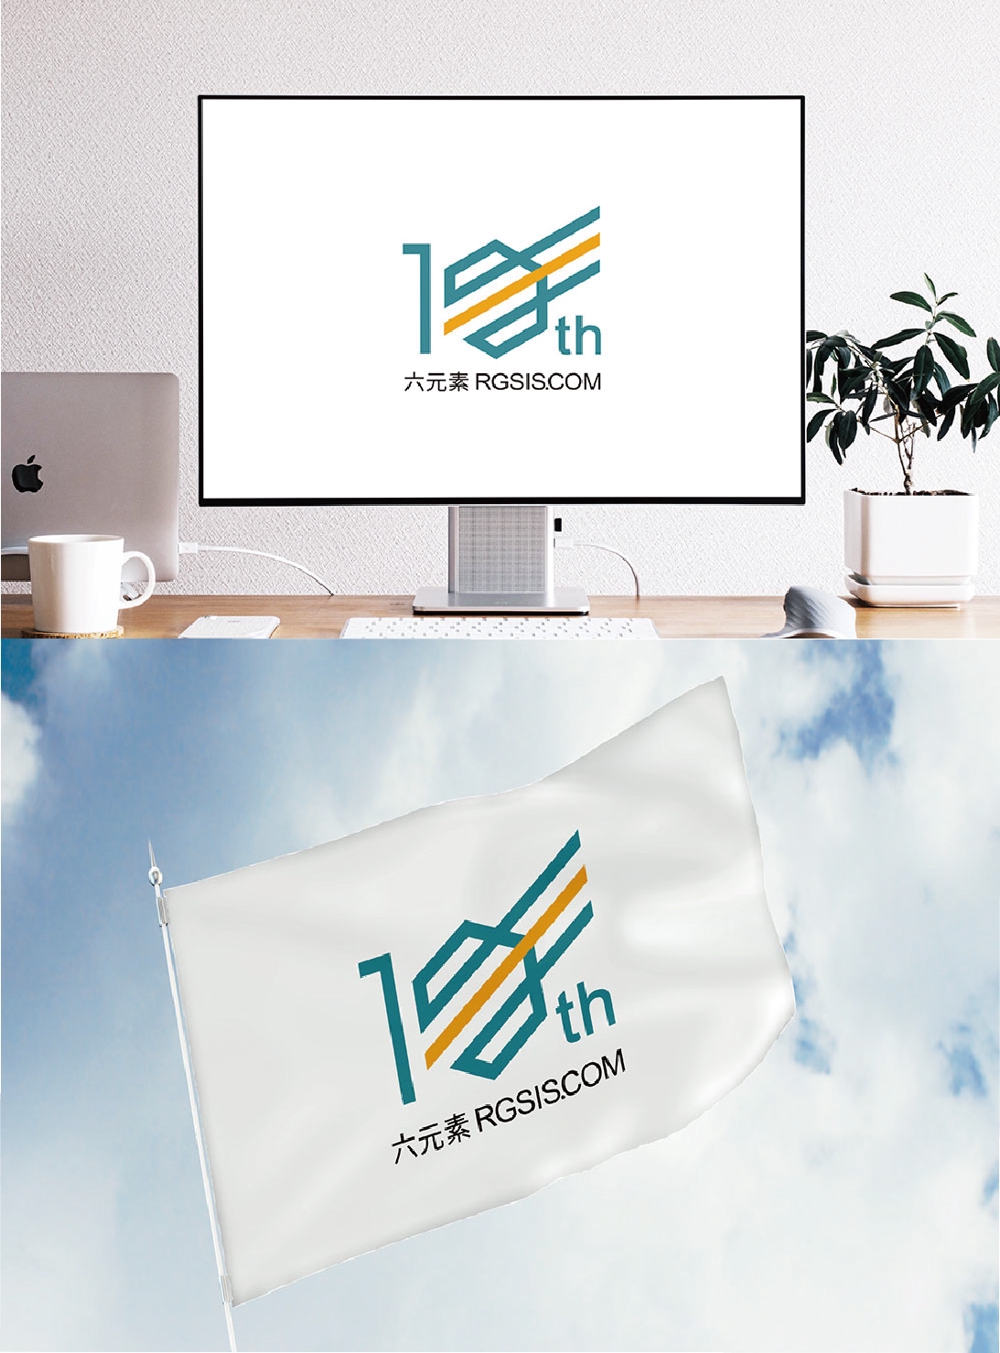 IT企業10周年記念ロゴ